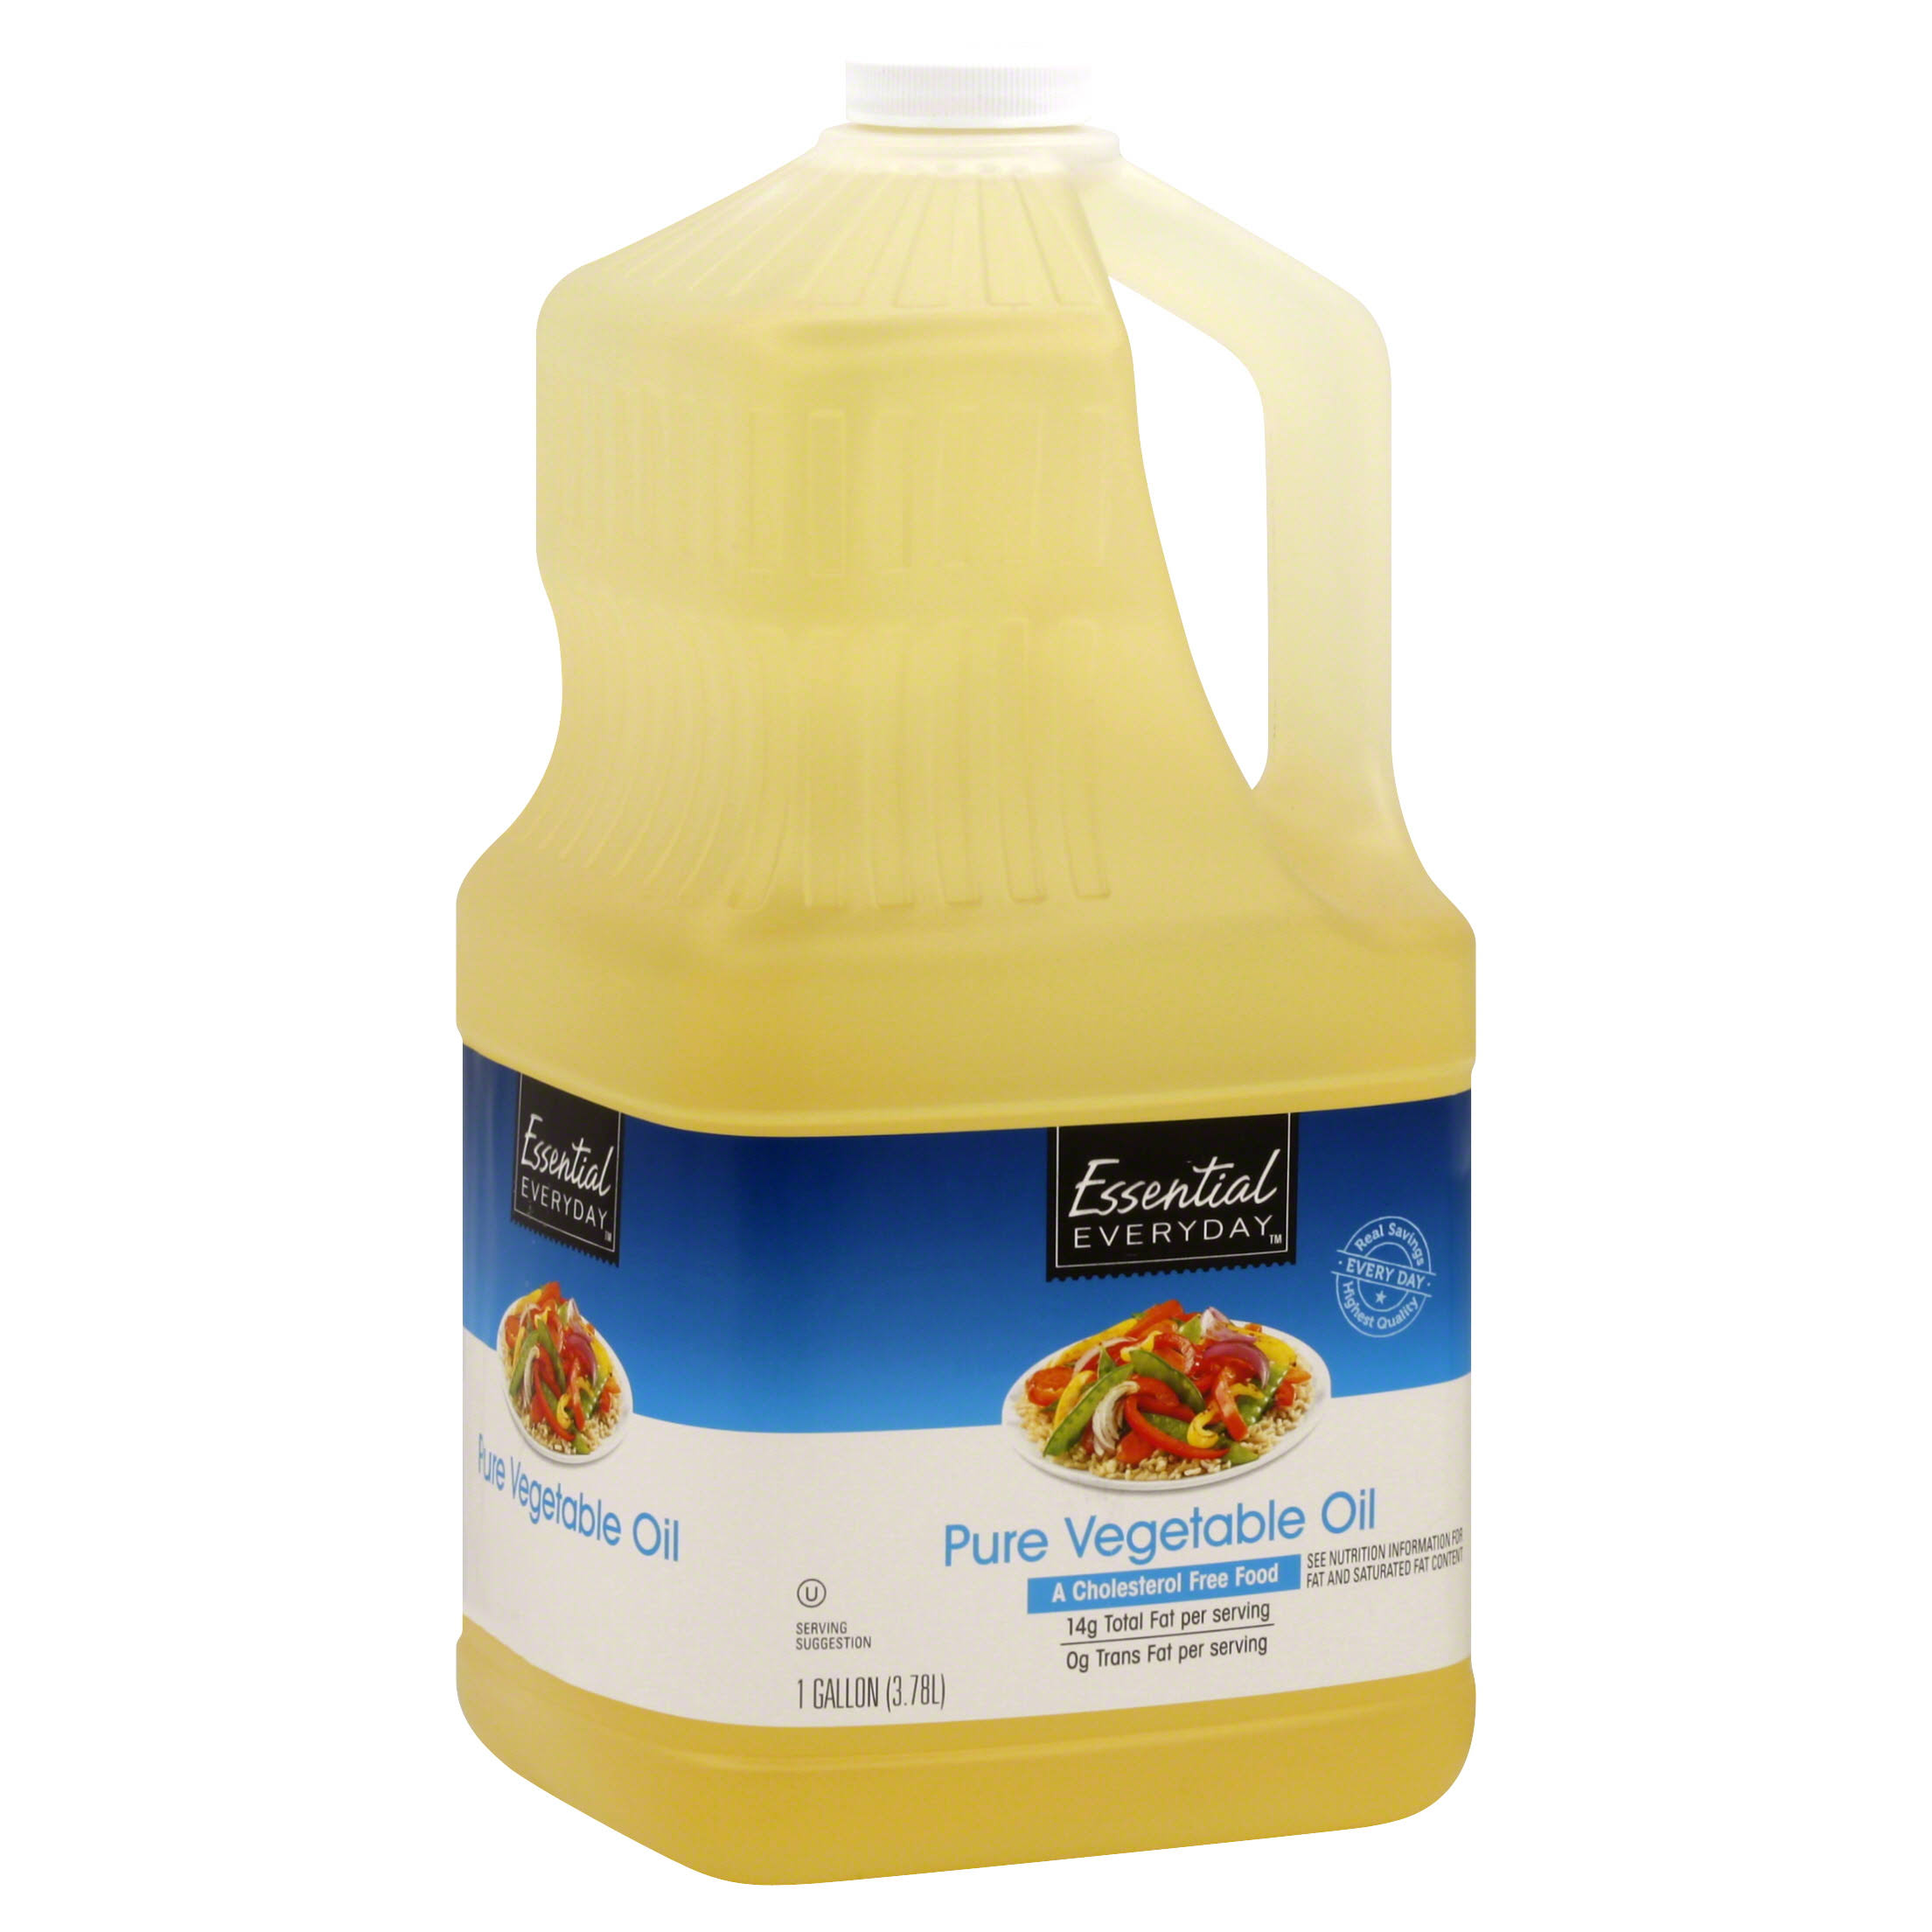 Essential Everyday Vegetable Oil, Pure - 1 gl (3.78 lt)